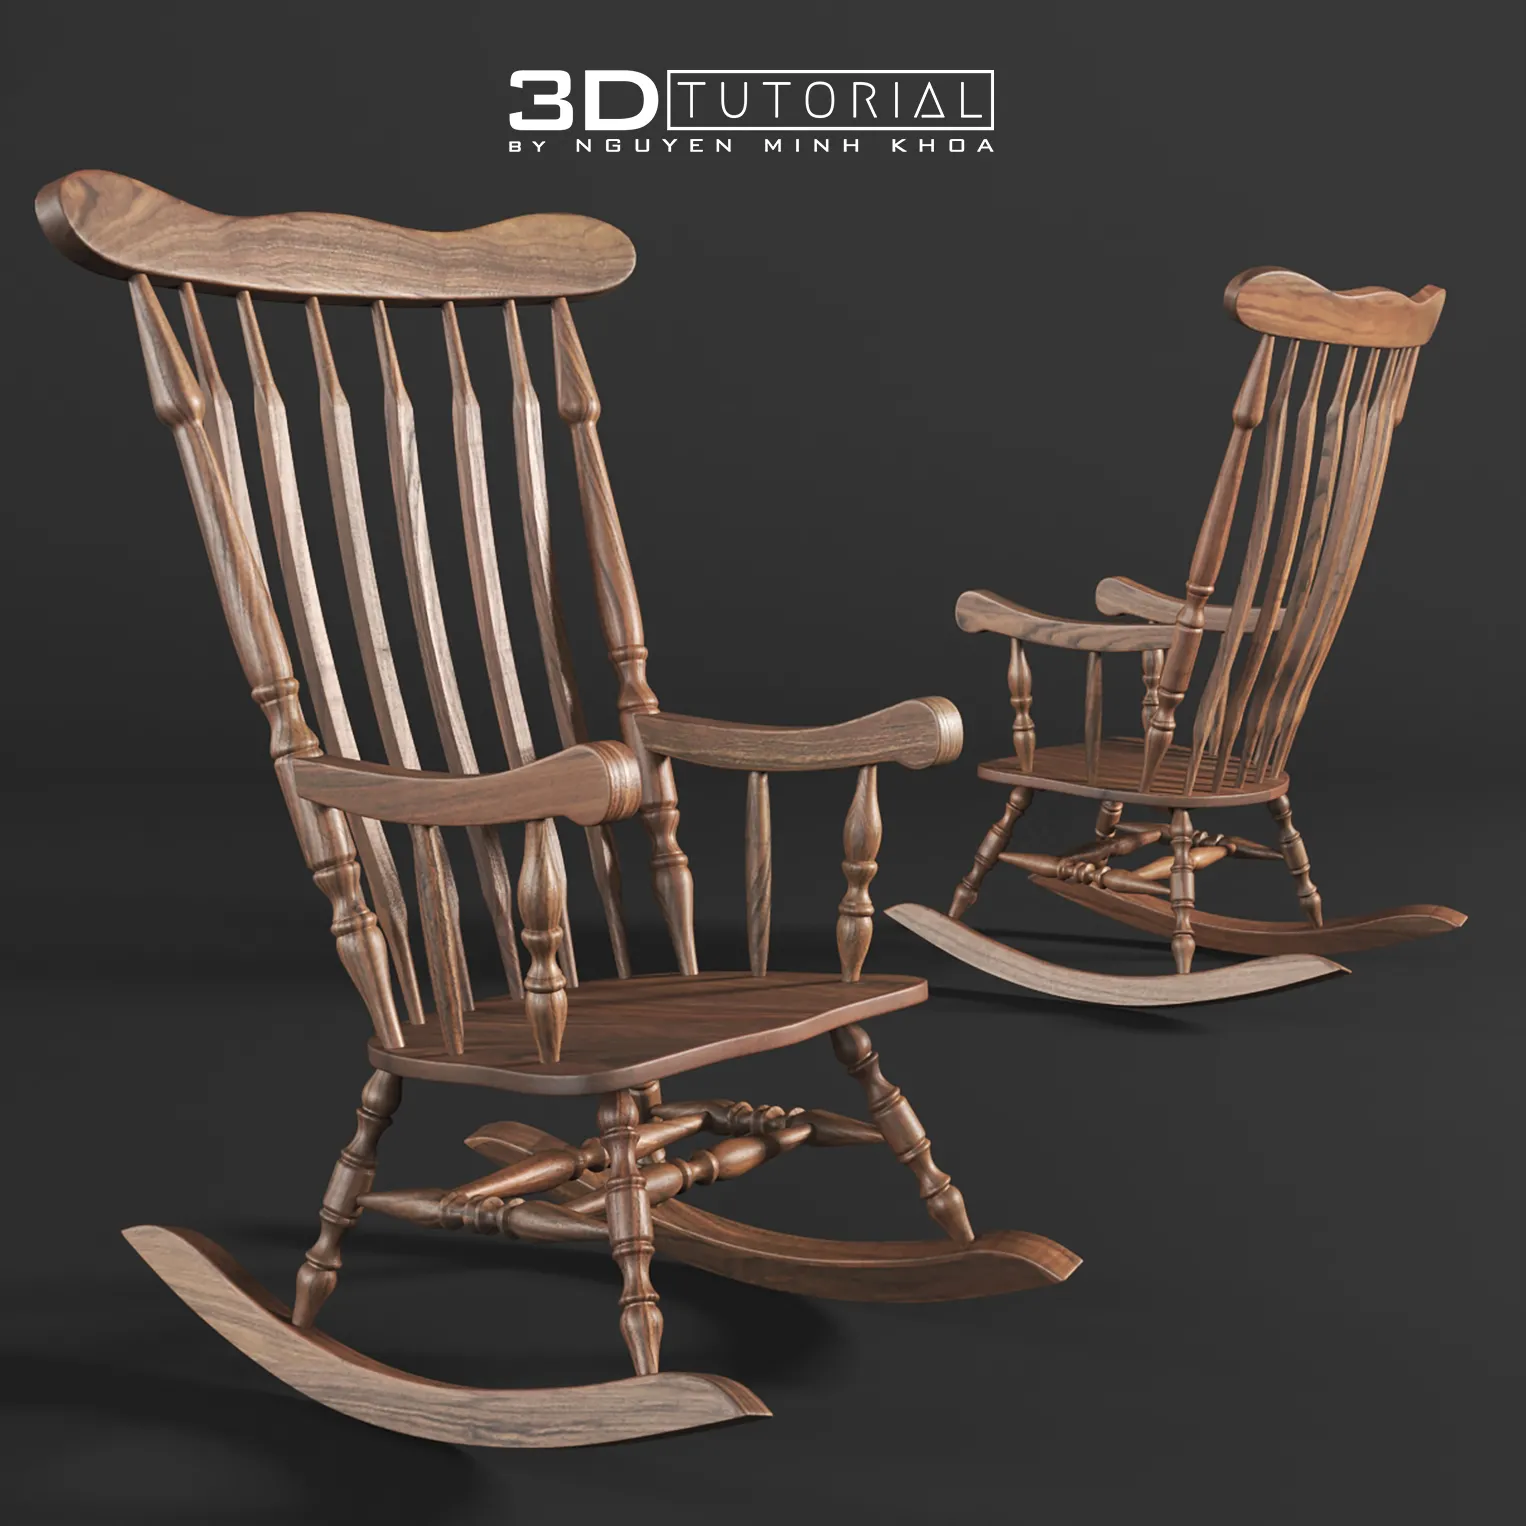 FURNITURE 3D MODELS – Rocking chair modelbyNguyenMinhKhoa